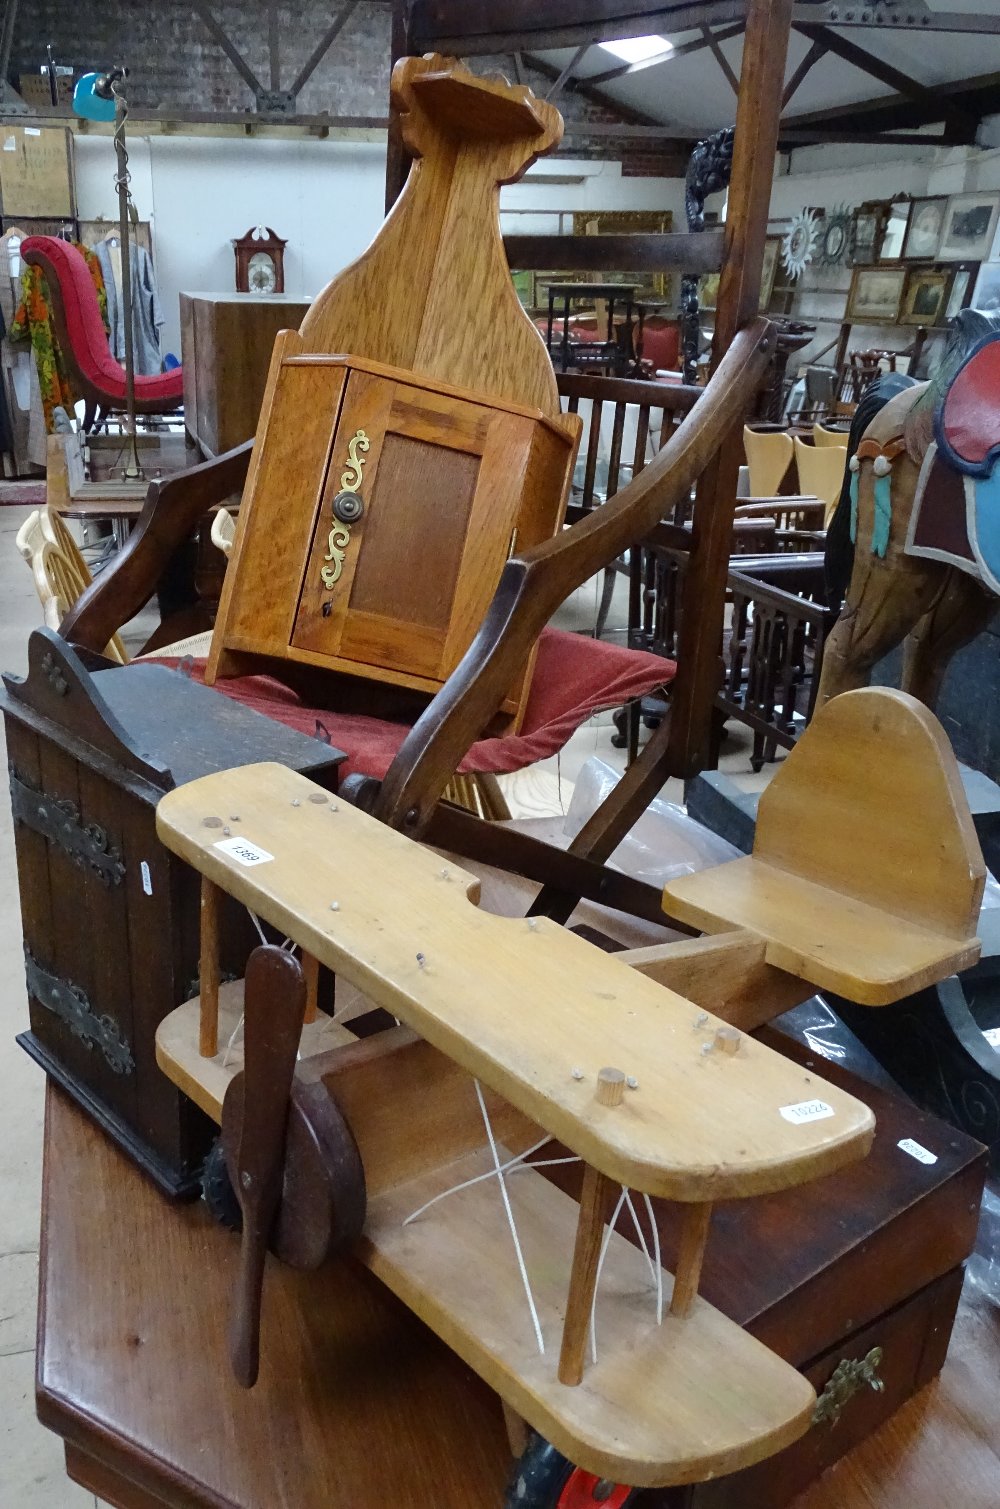 A child's wooden aeroplane, a folding chair, a cor